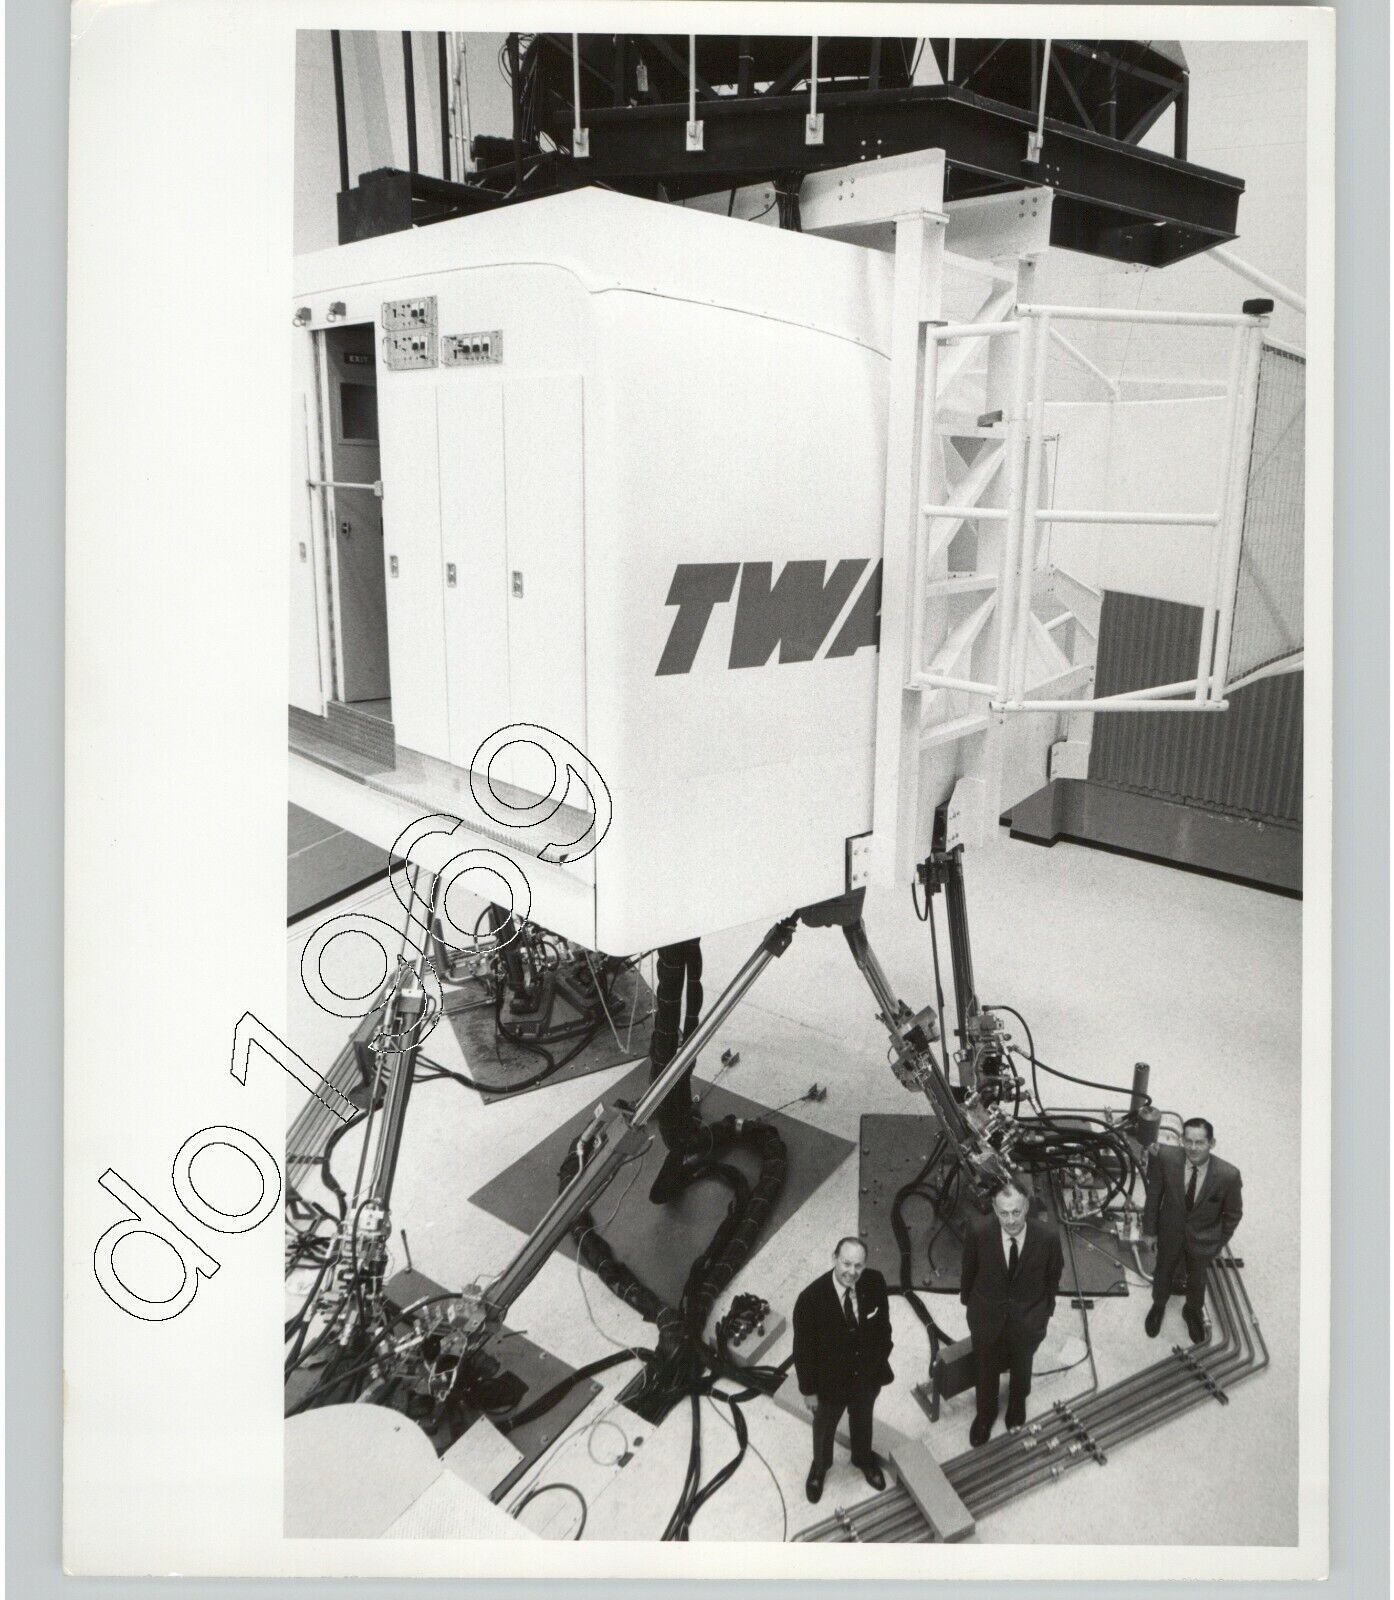 TWA BOEING 747 Flight Simulator Raised High Above Floor 1950s Press Photo